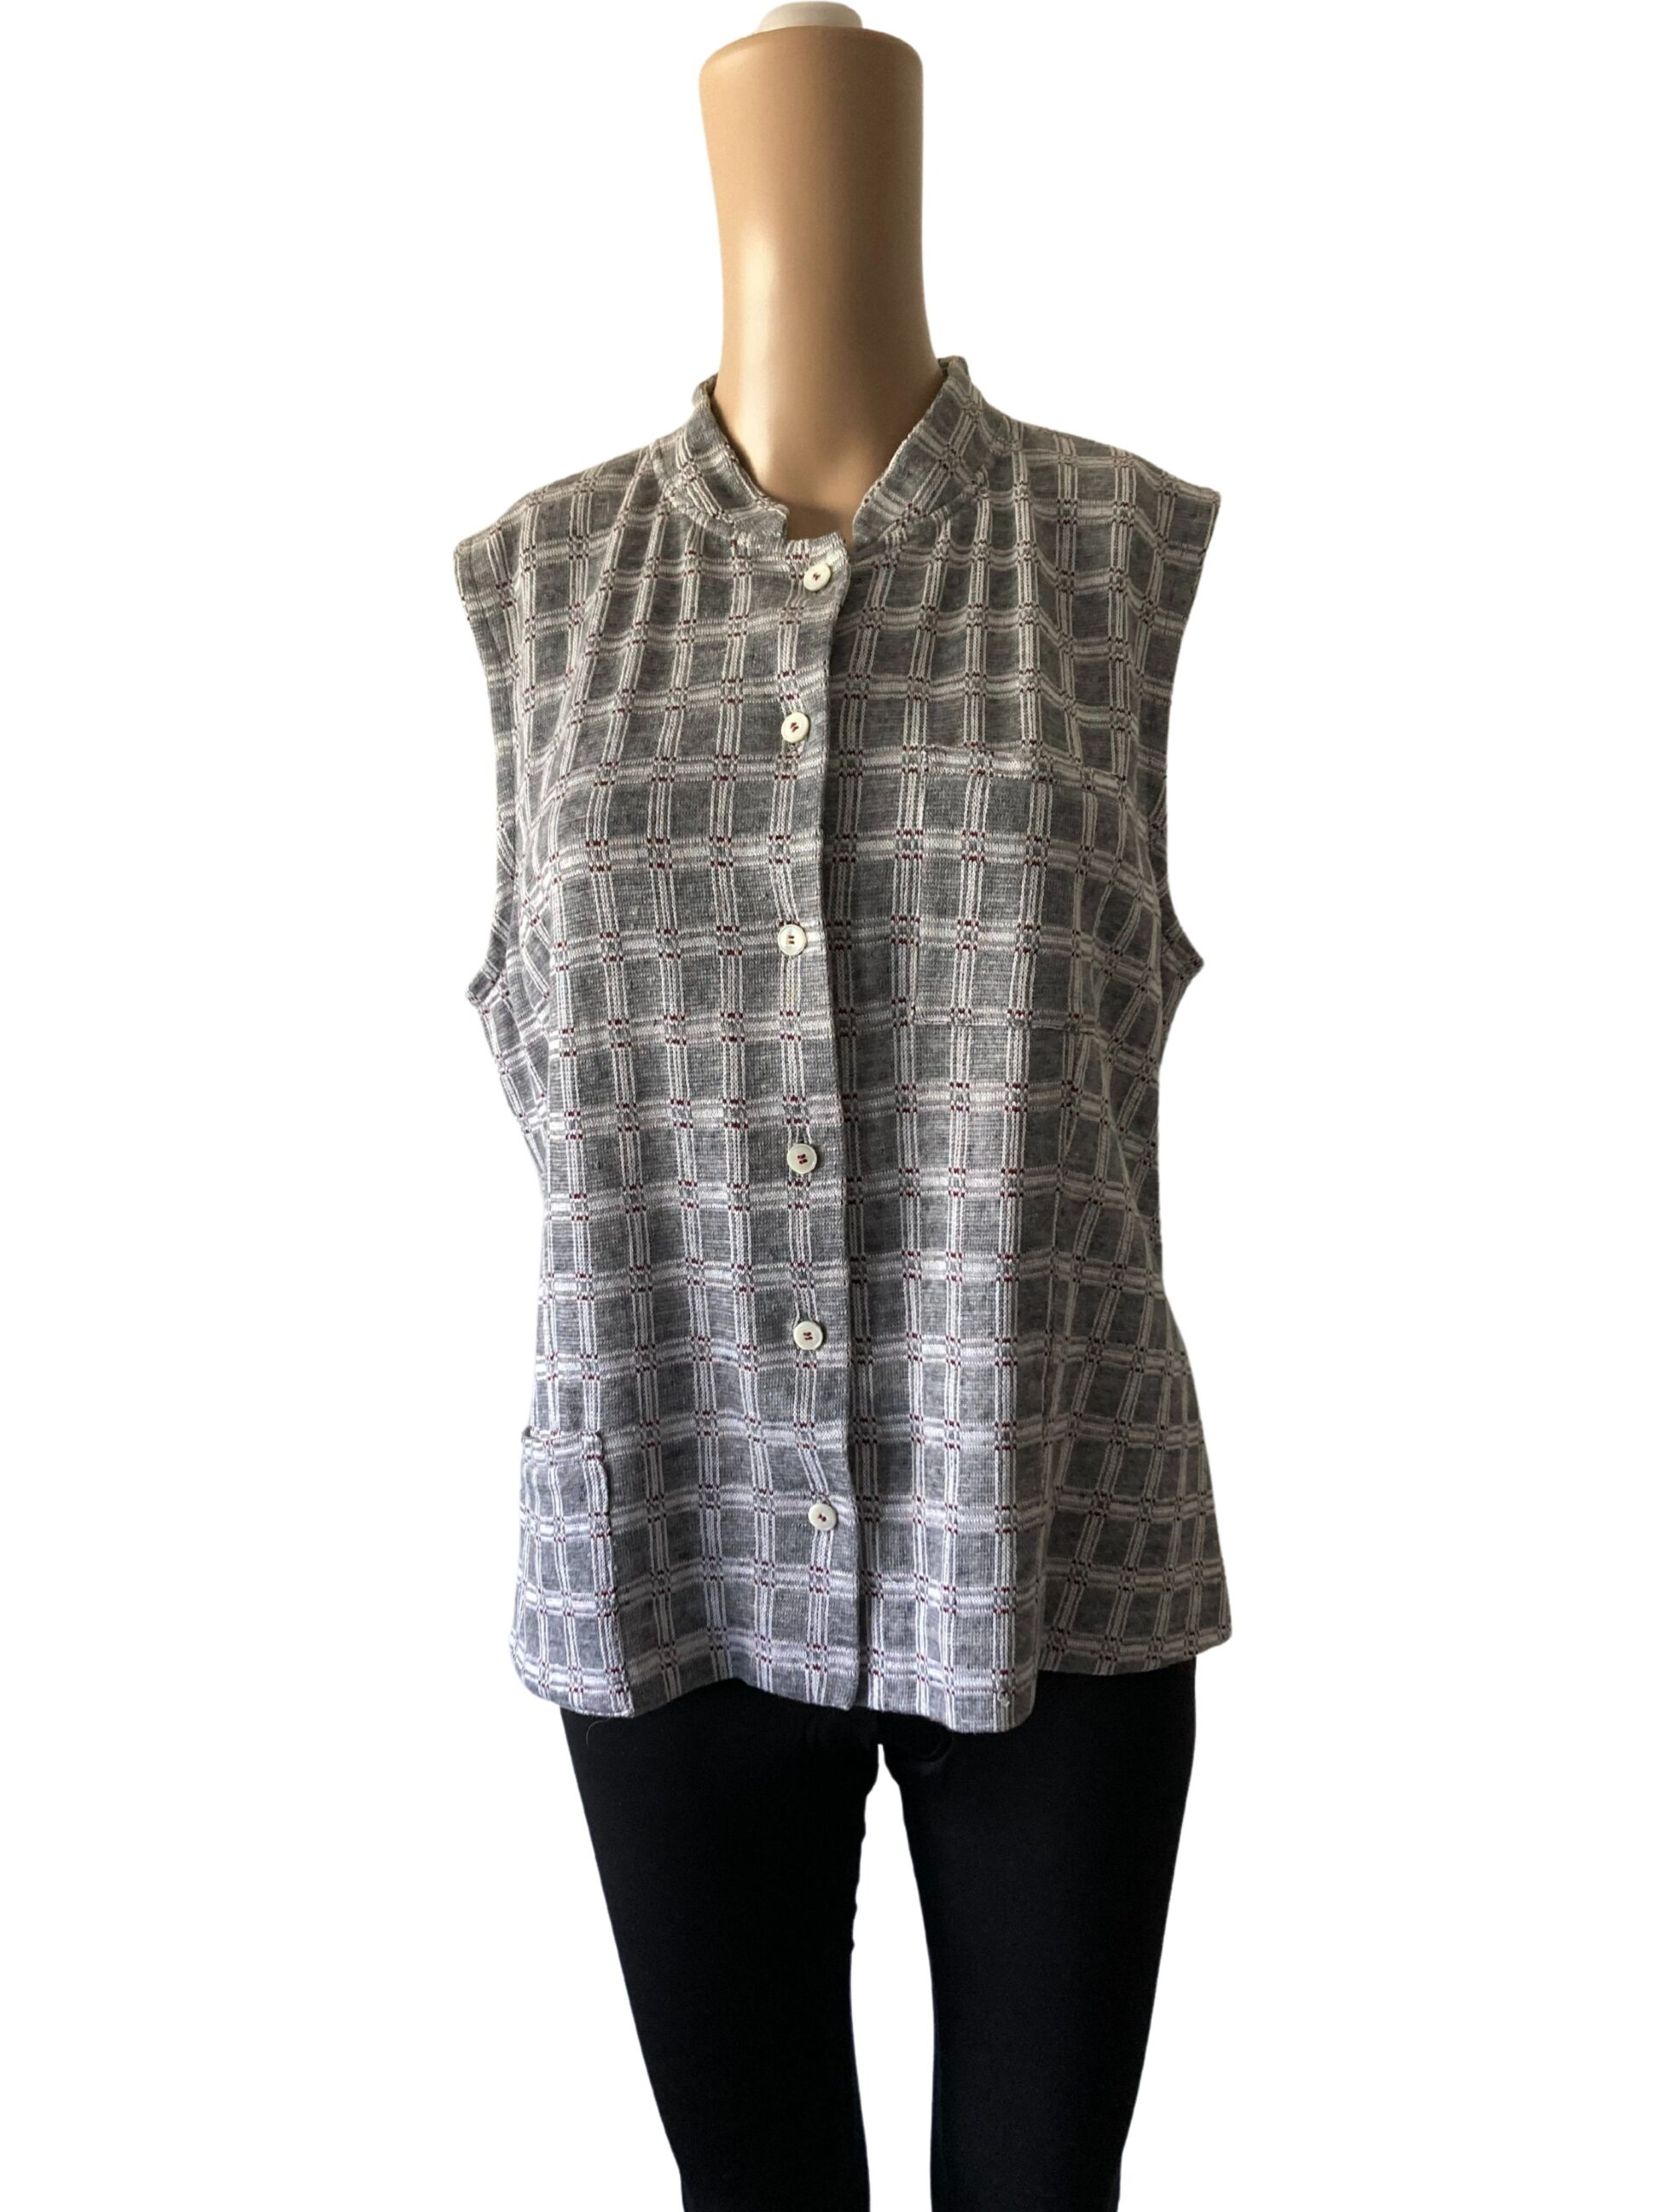 Women's BEL designed by Evelyne De Clercq size M gray vest - Catherines ...